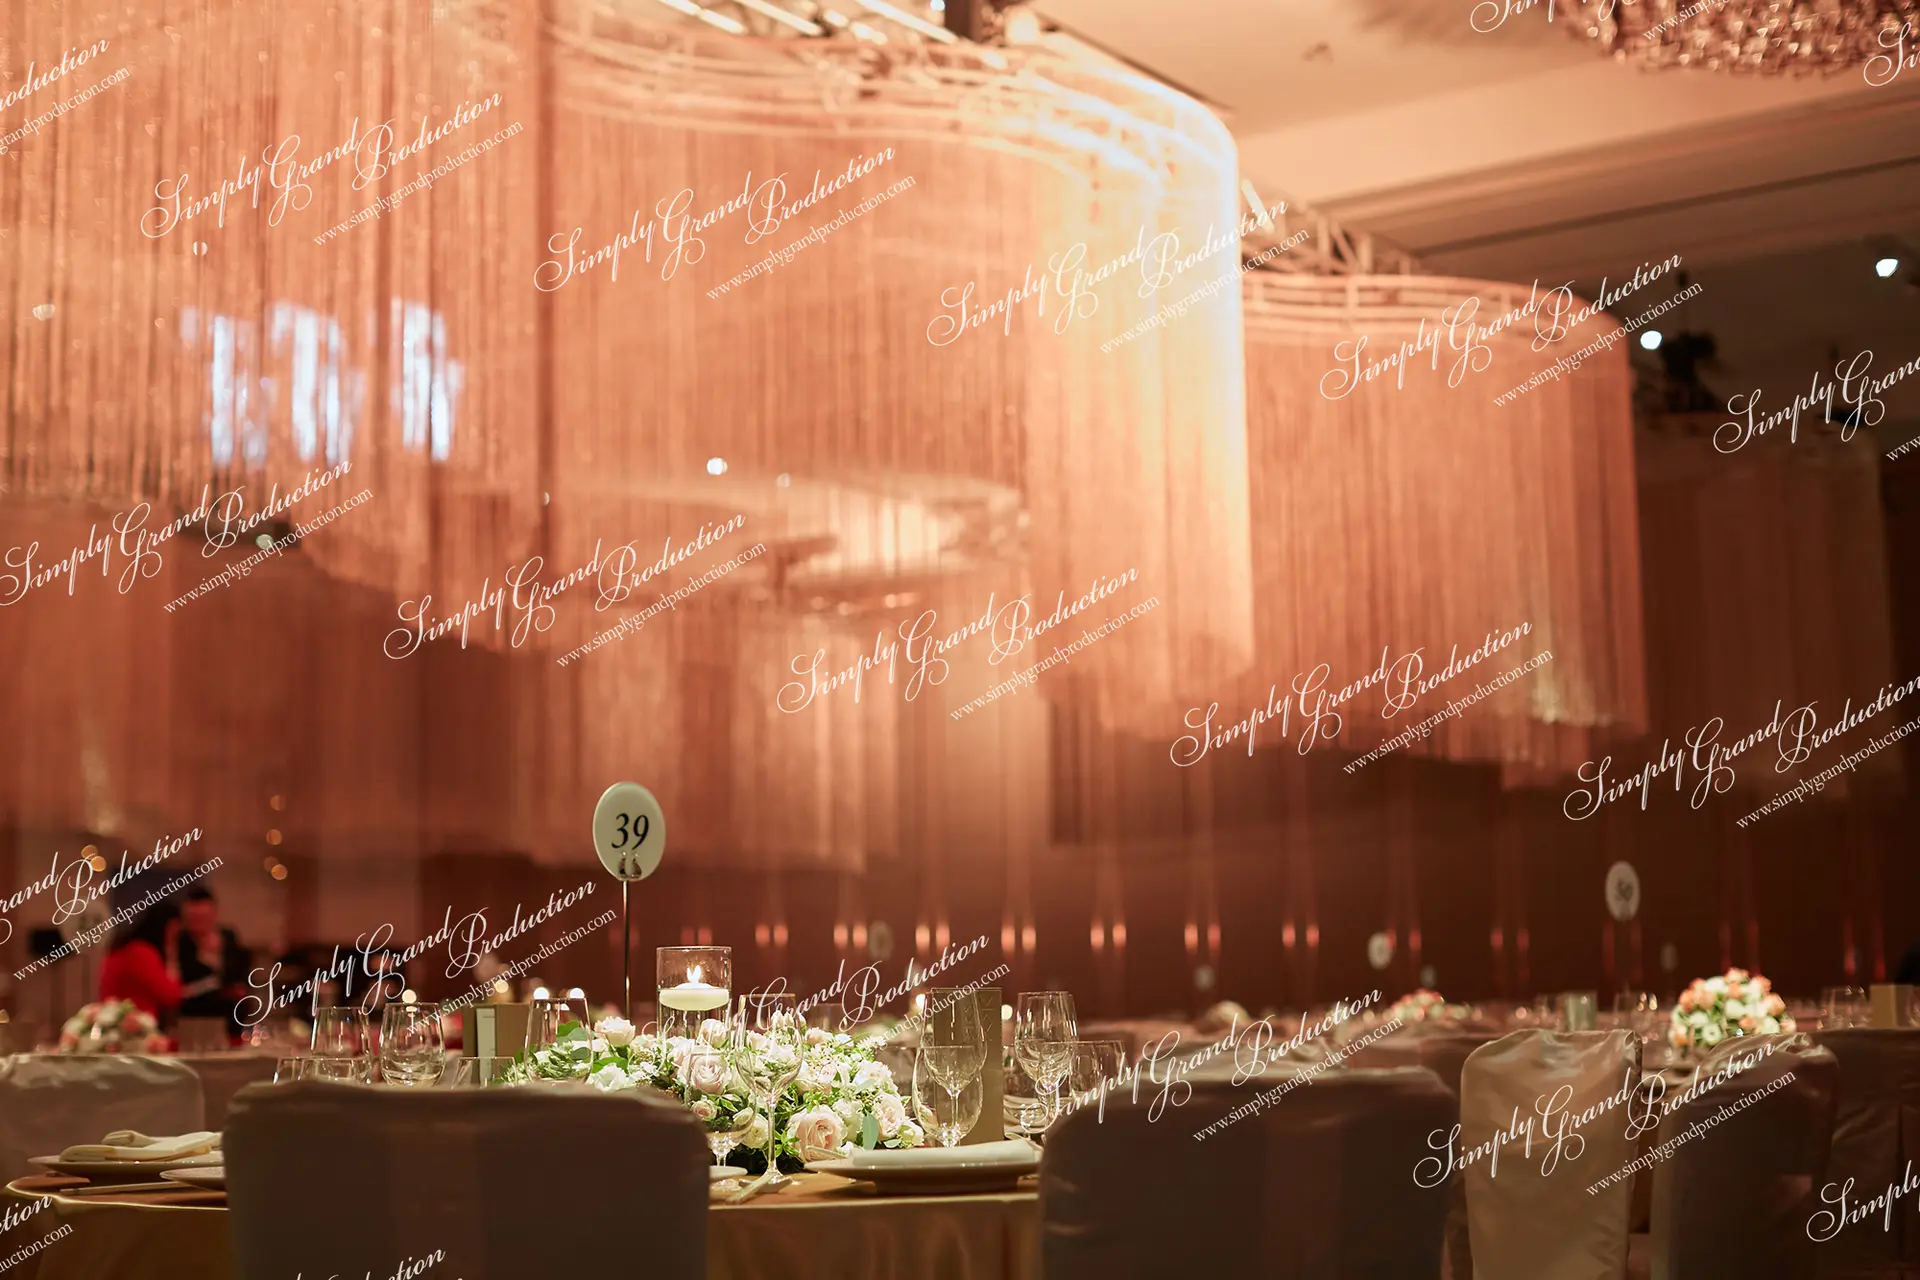 Simply_Grand_Production_Ballroom_hanging_installation_peach_Kerry_Hotel_1_8_wm